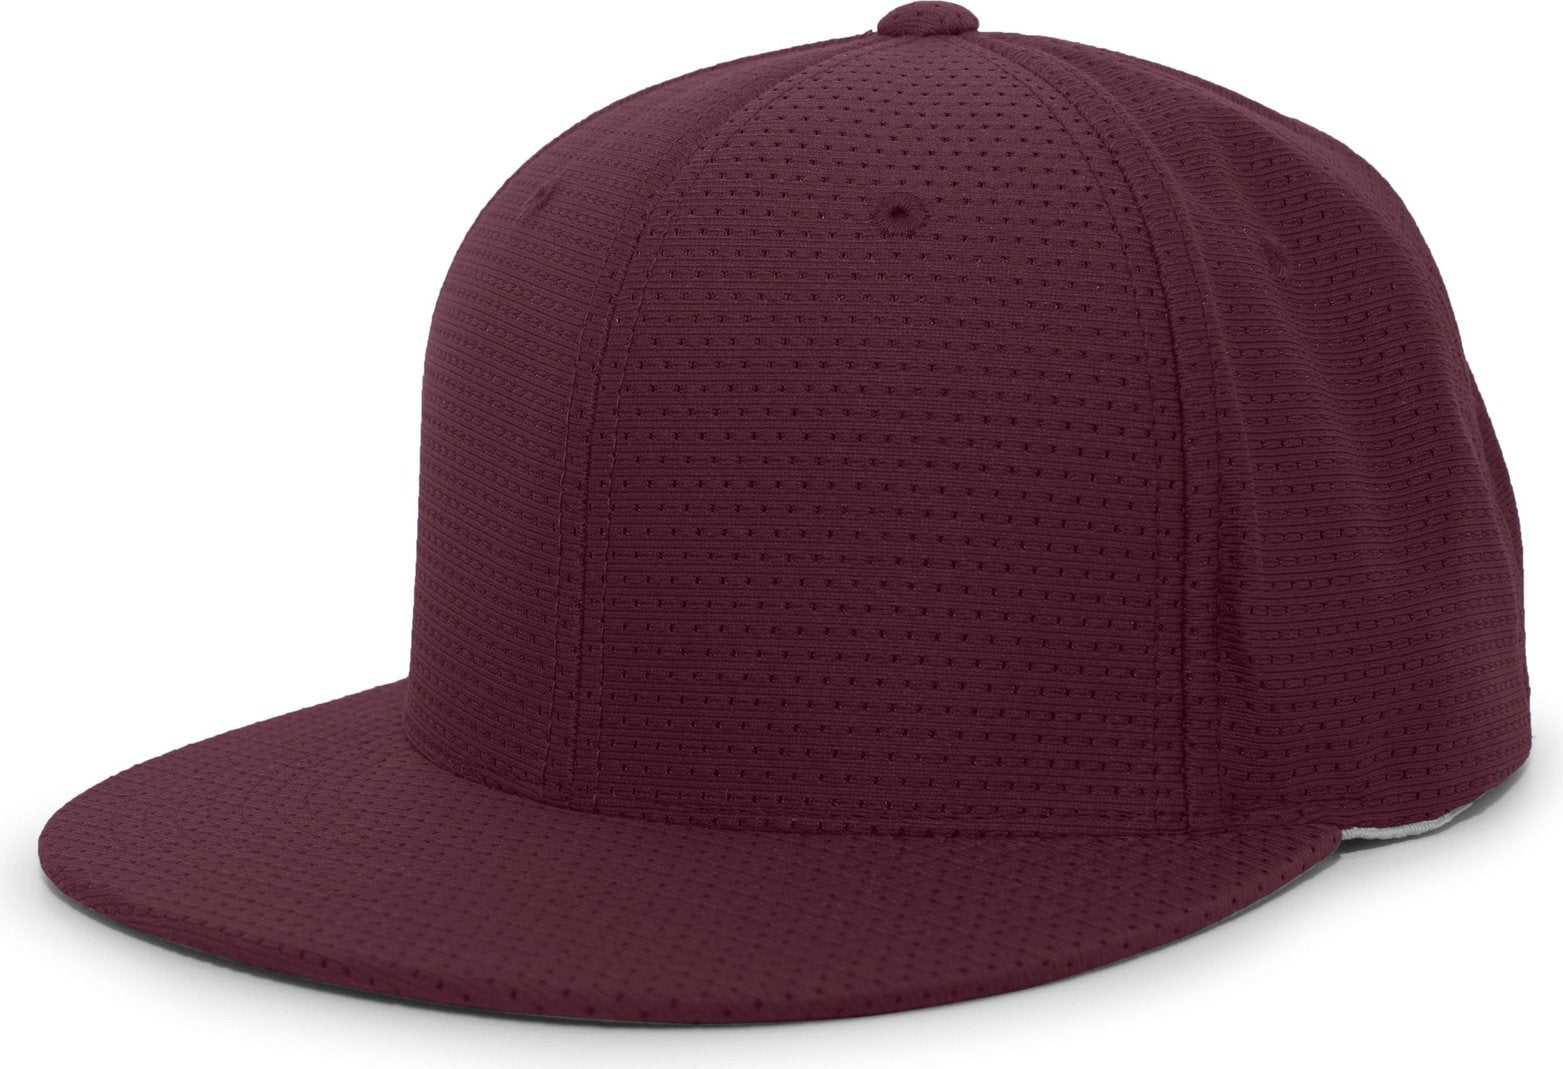 Pacific Headwear ES818 Air Jersey Performance Flexfit Cap - Maroon - HIT a Double